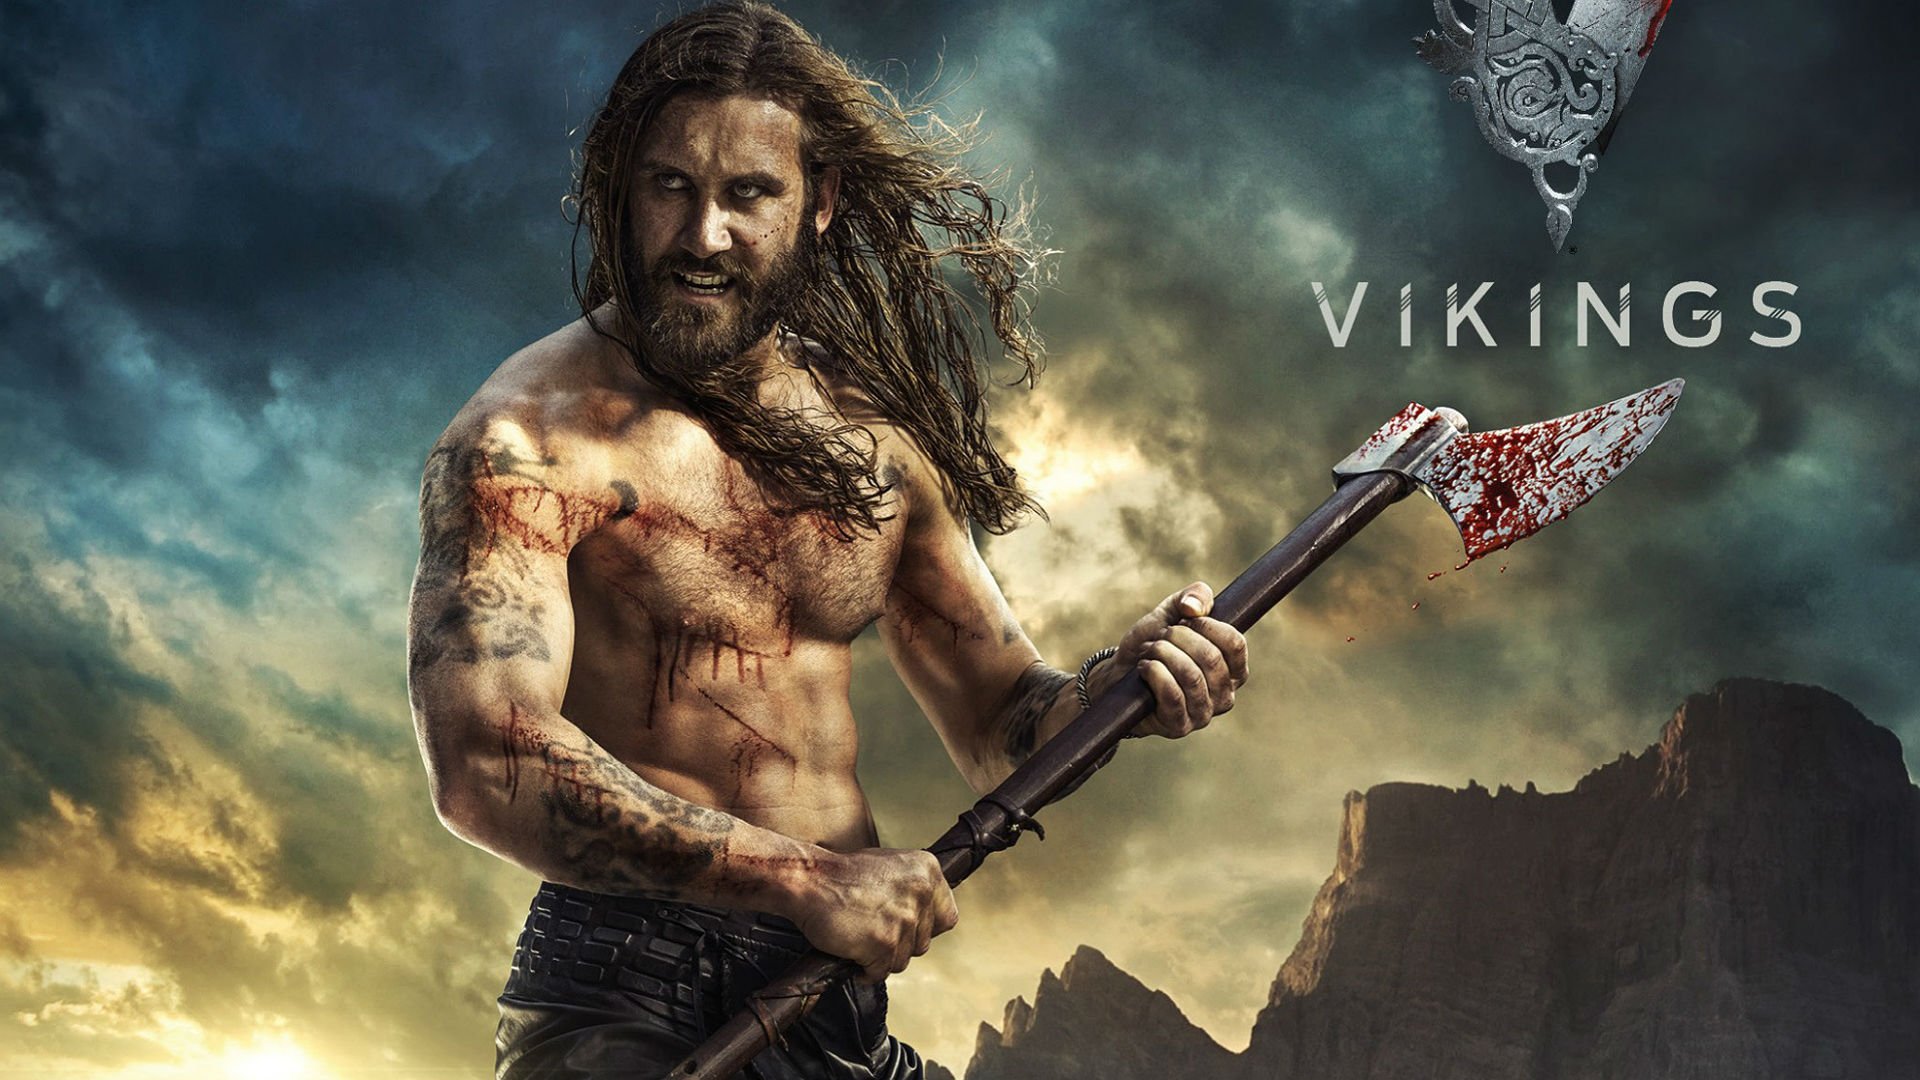  fantasy adventure series 1vikings viking warrior wallpaper background